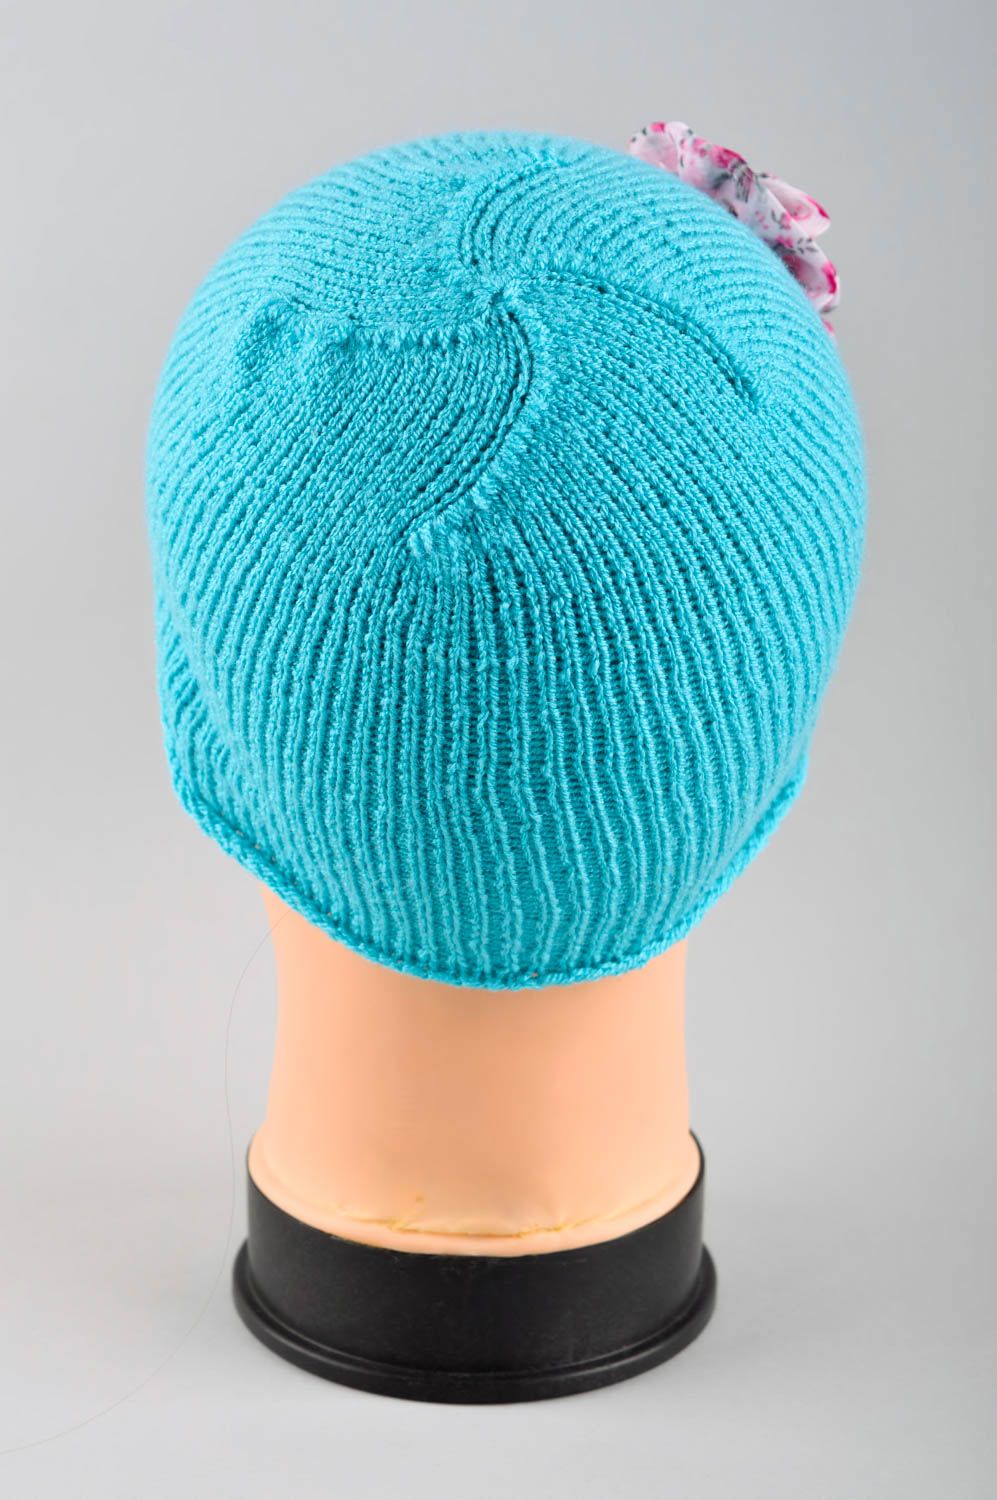 Handmade hat for kids baby hat crochet hat kids accessories gifts for children photo 4